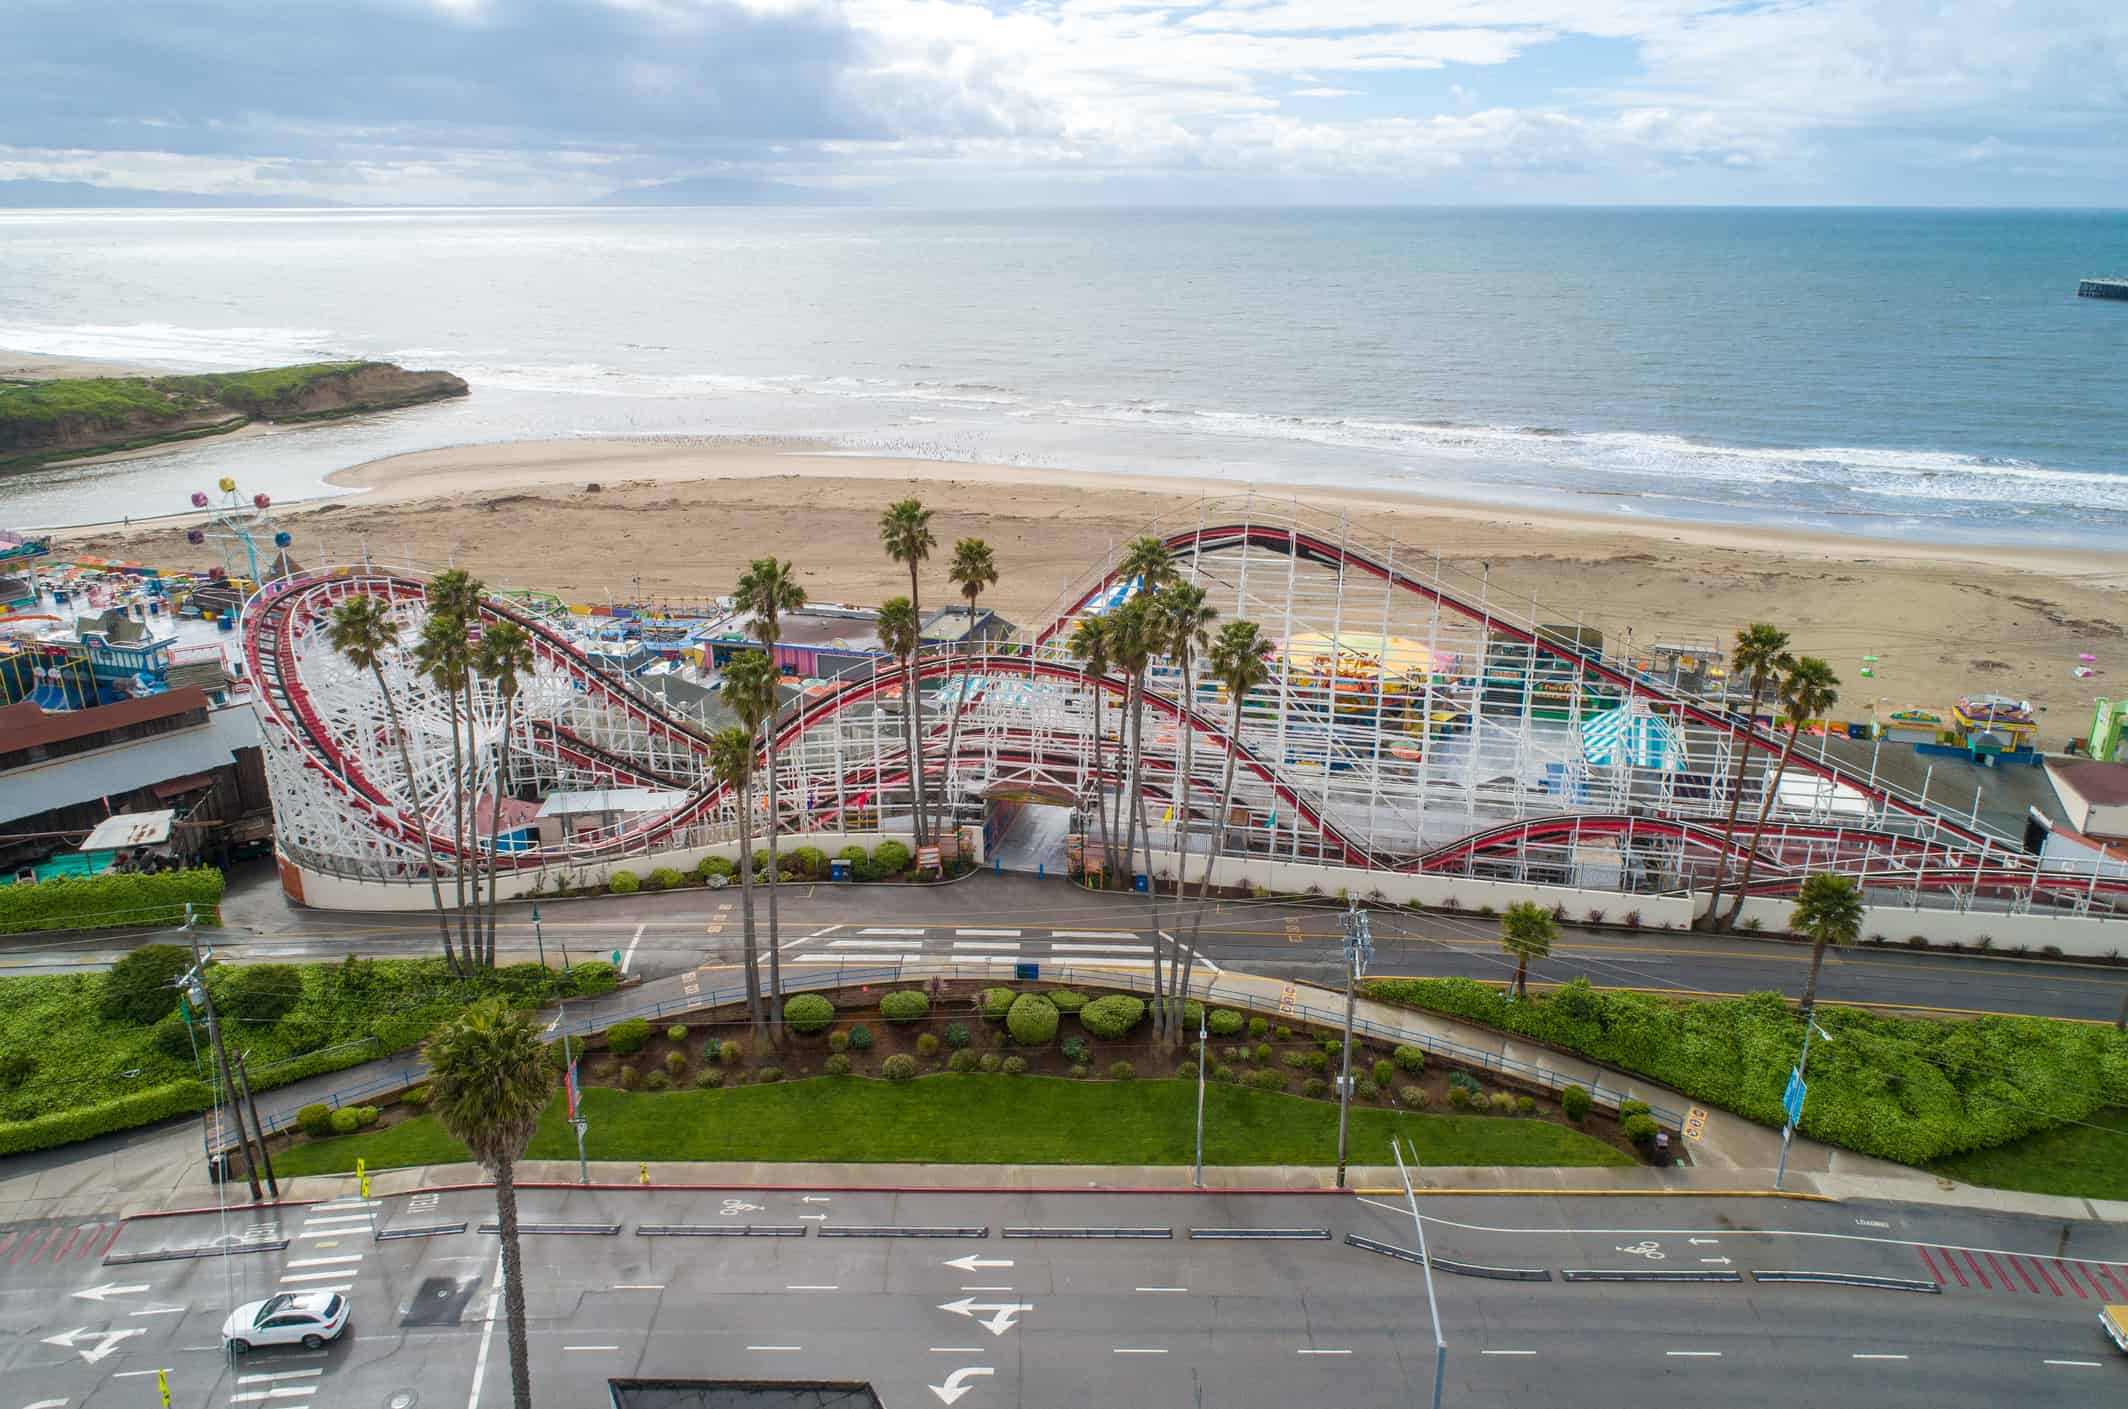 Santa Cruz Beach Boardwalk’s and the Giant Dipper